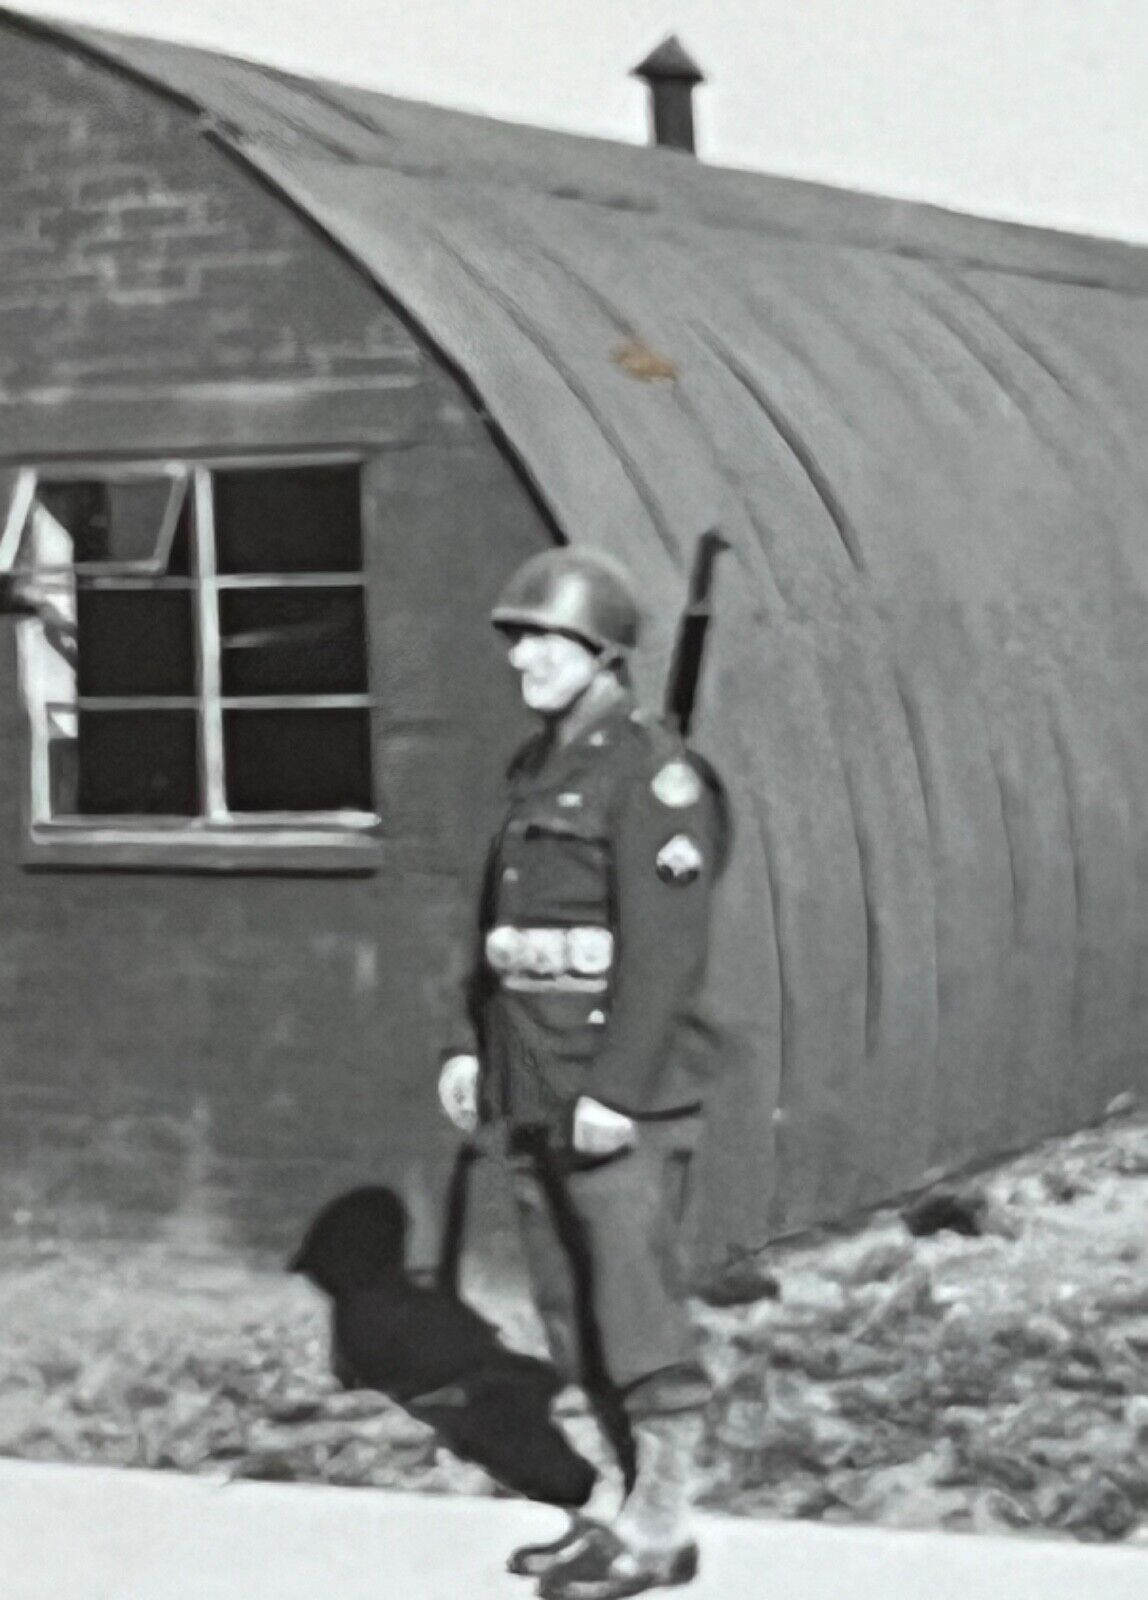 WWII US Military Man Otto Schmidt Snapshot Photograph 2.5 x 2